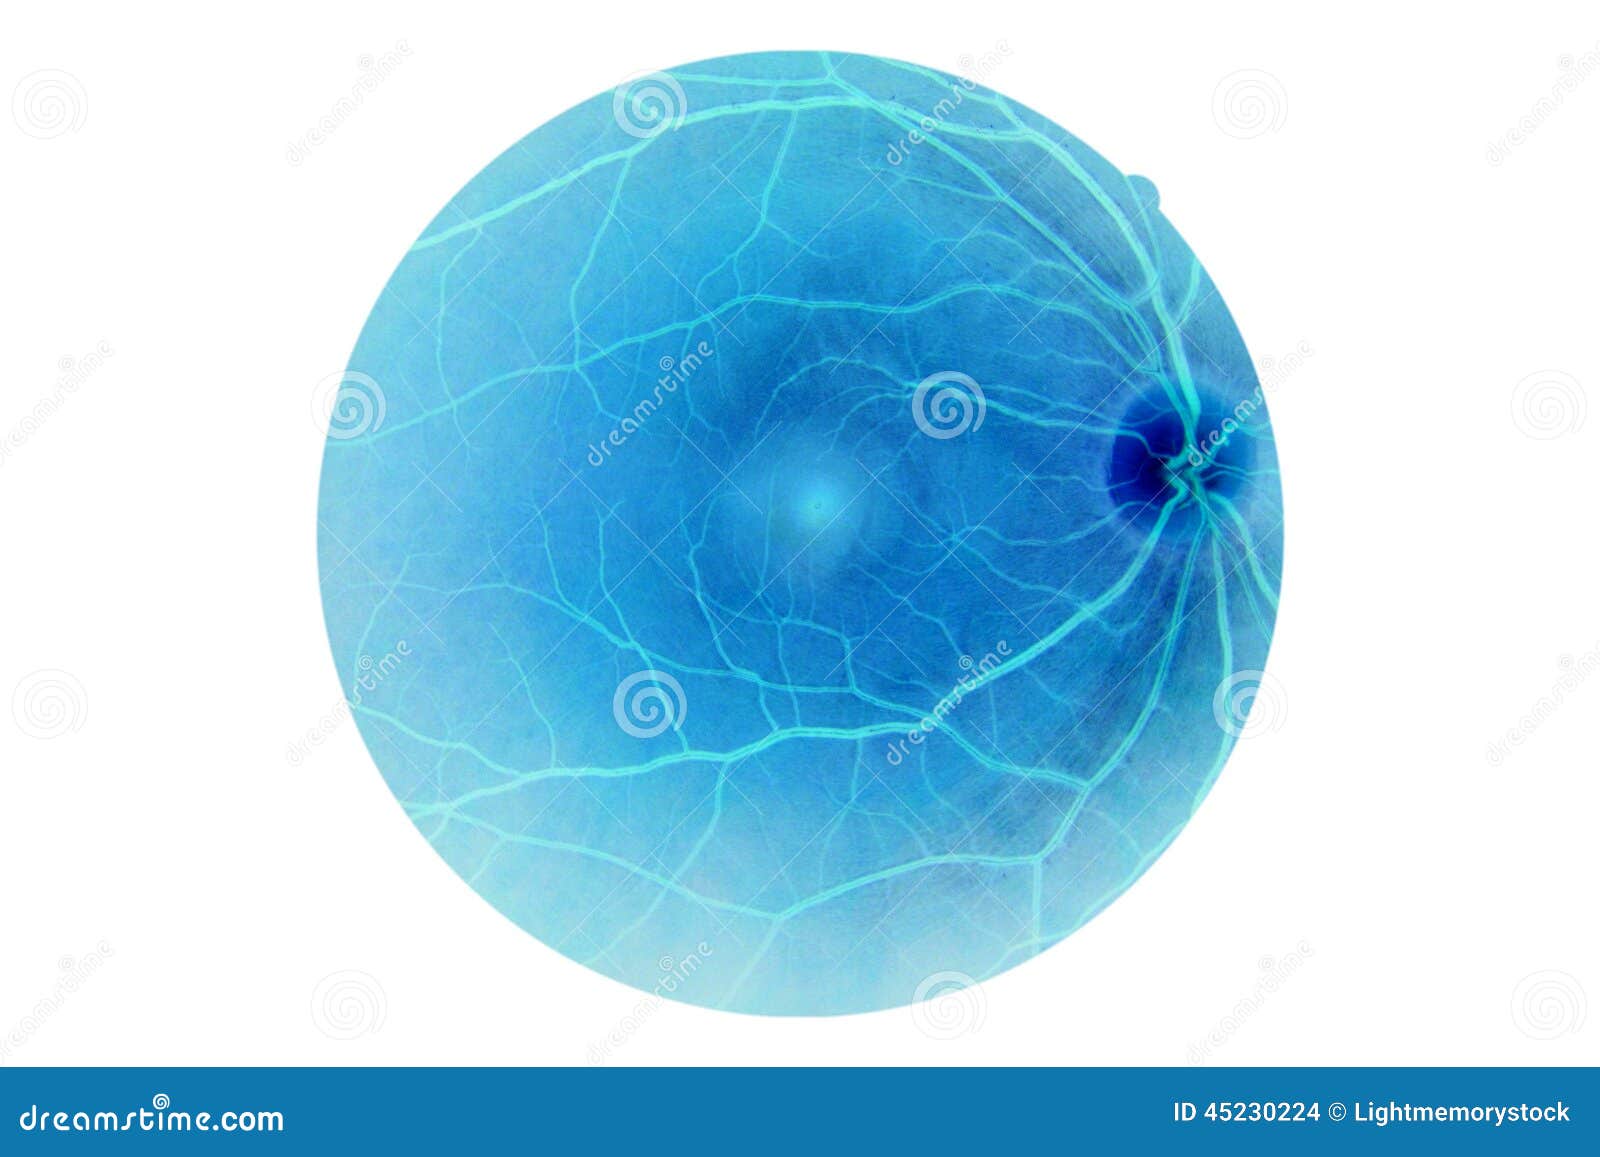 human eye anatomy, retina